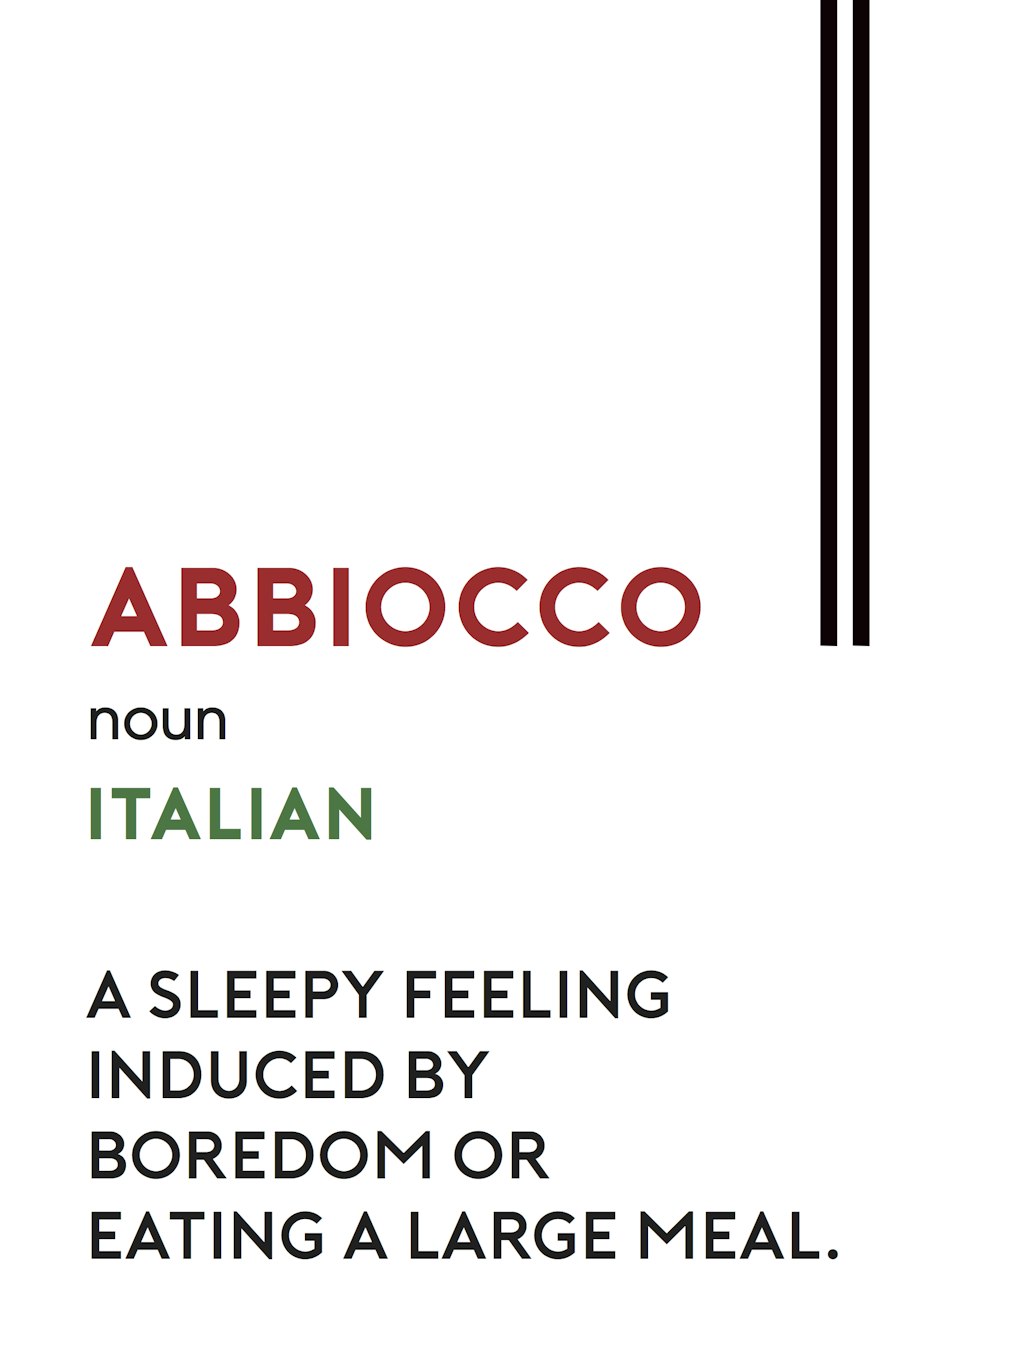 Italian-Abbiocco2